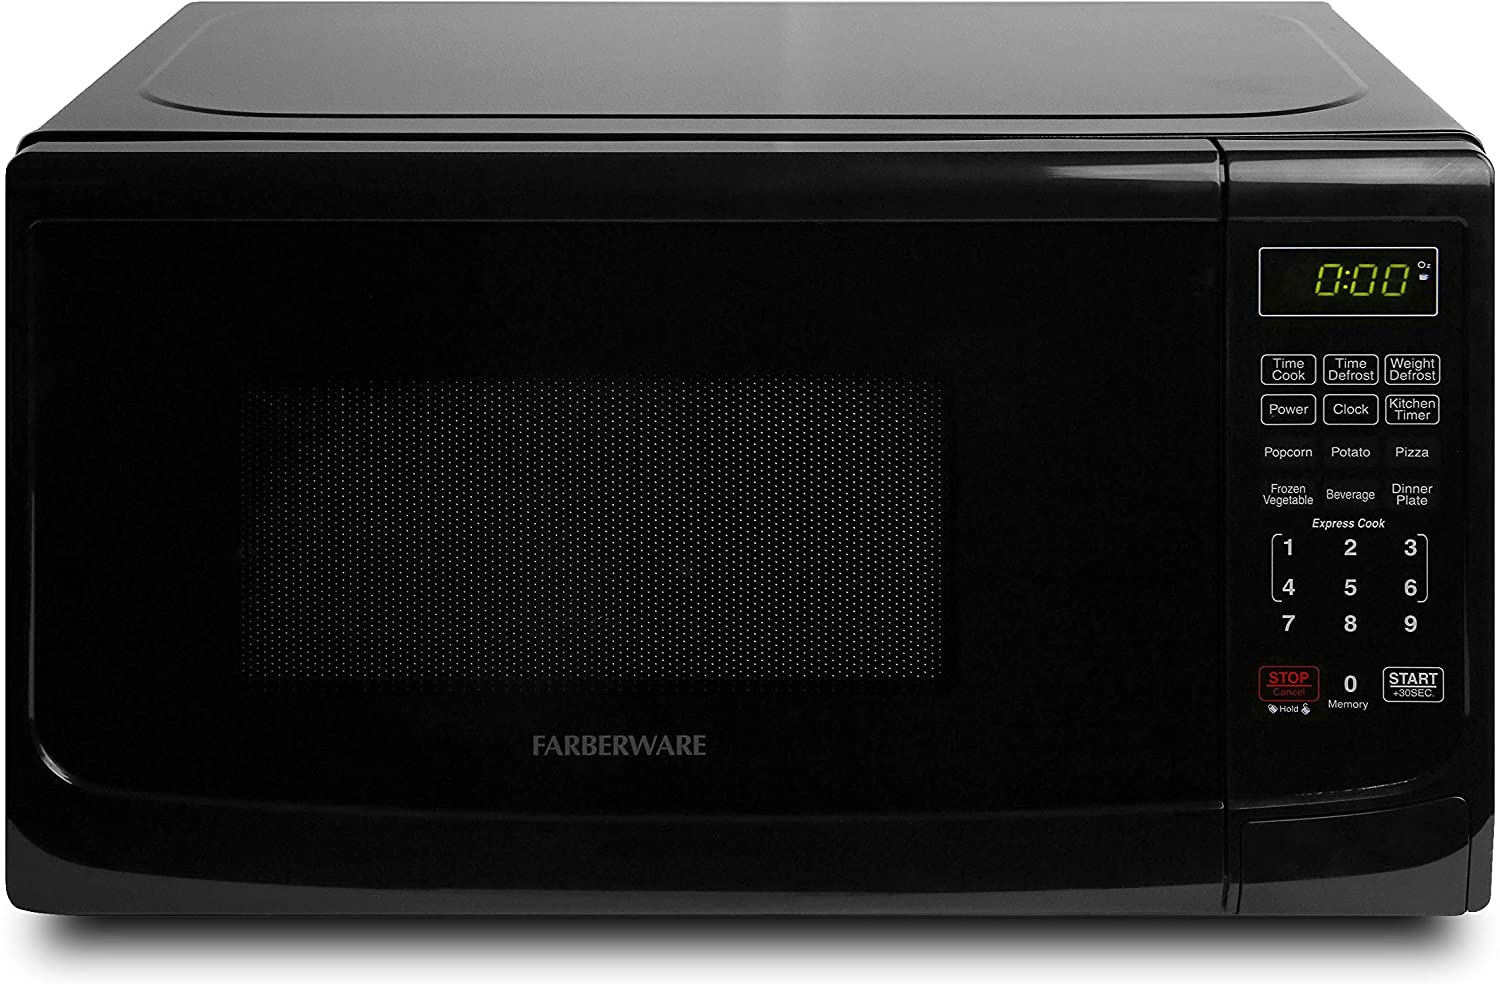 Farberware Classic microwave oven